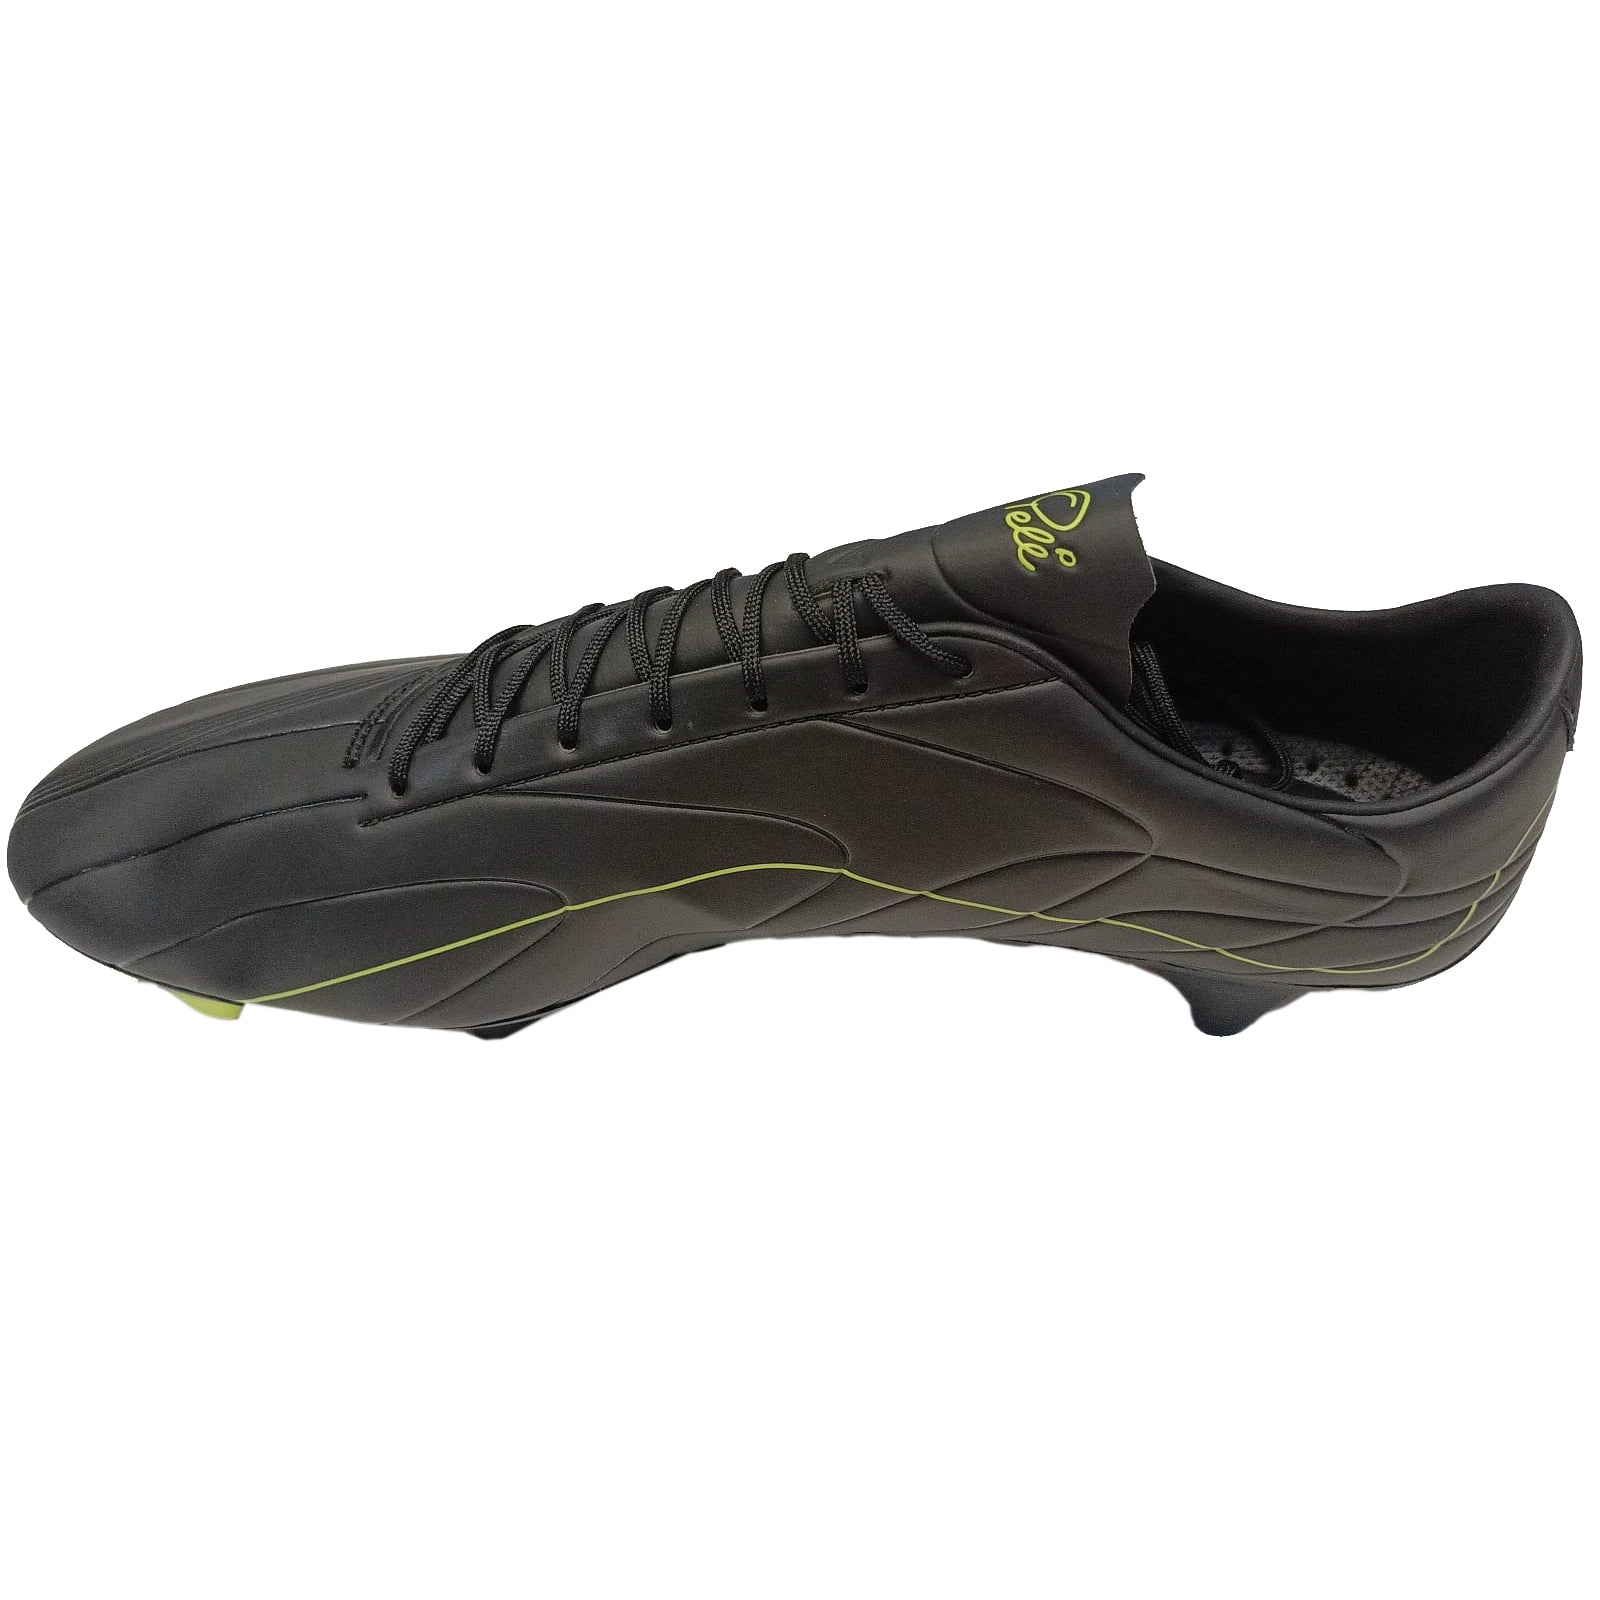 Pele Sports Trinity 3E FG Junior Kid's Football Boots - Black / Neon Yellow